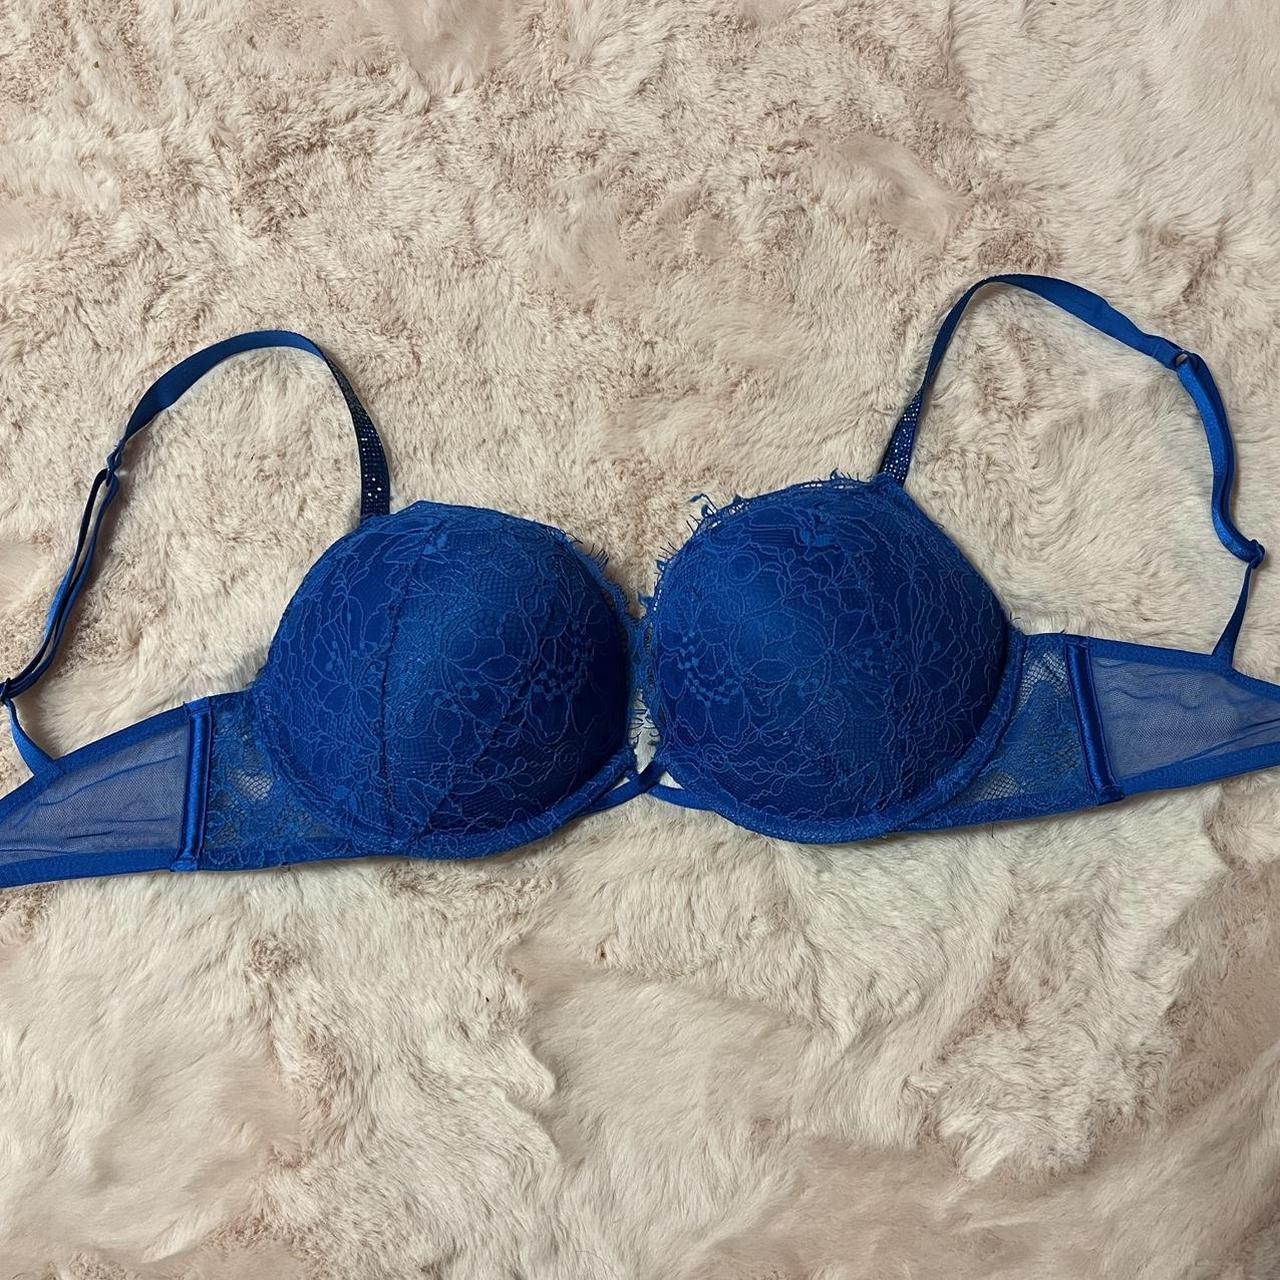 Classic royal blue Victoria's Secret push-up bra